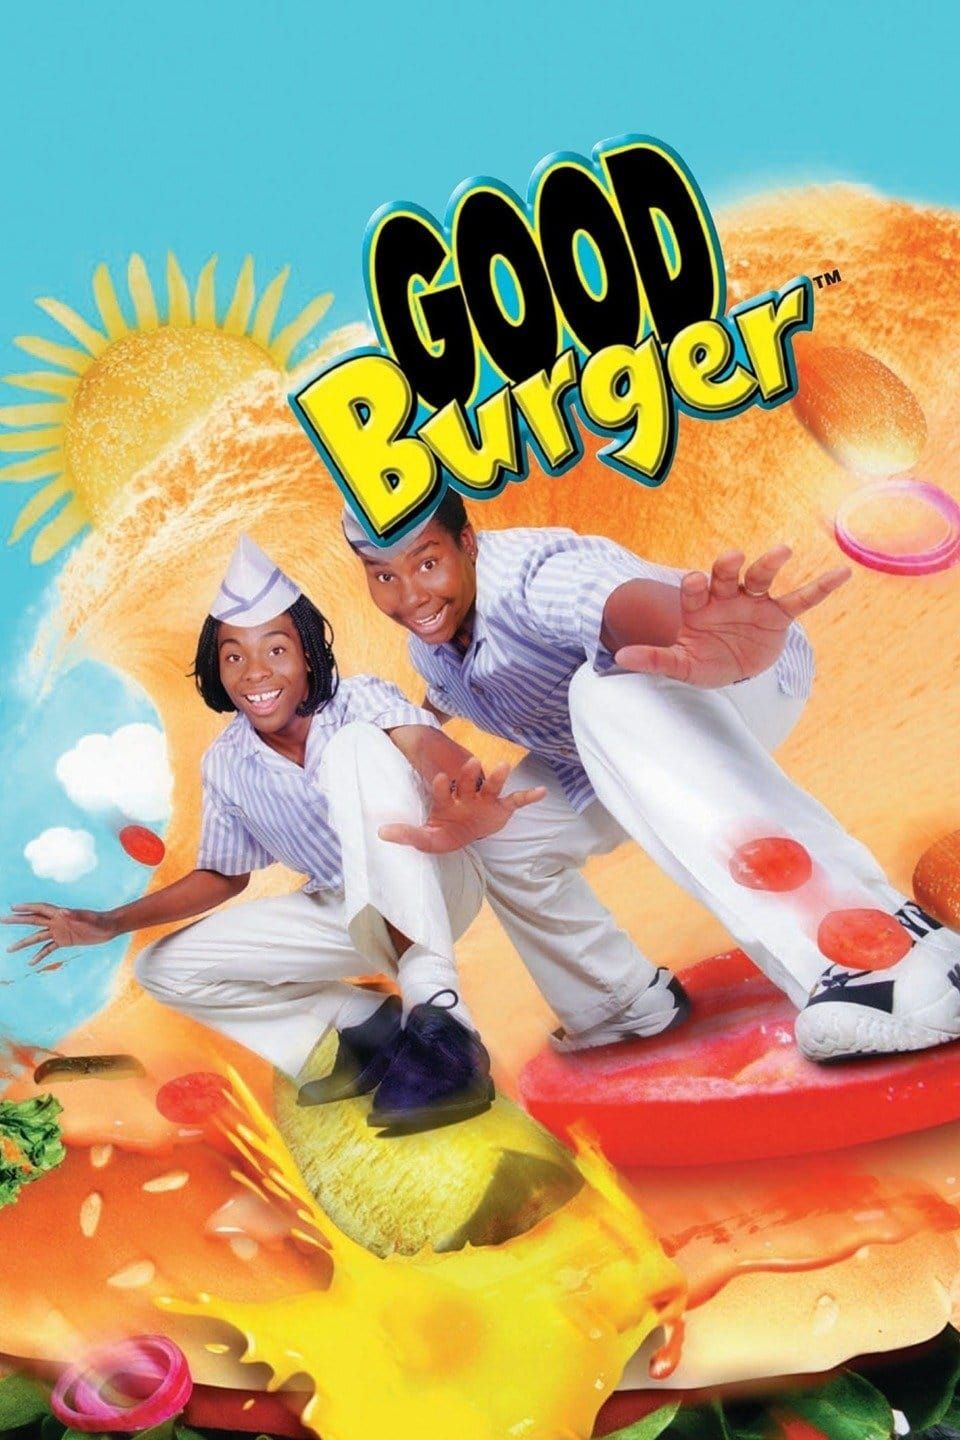 Good Burger 2 Trailer Teases the Return of Kenan & Kel on Paramount+